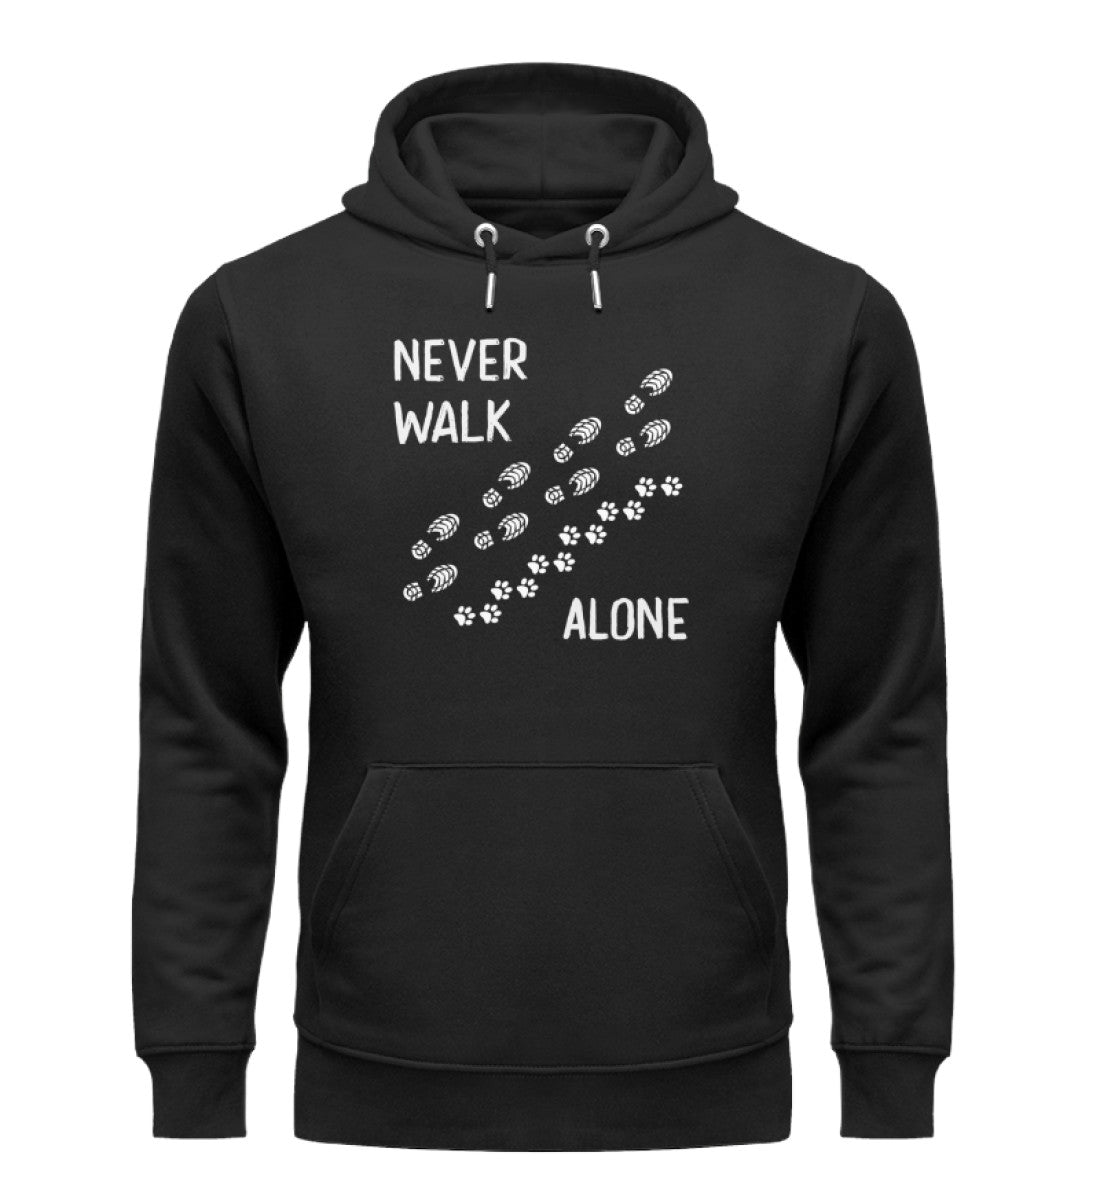 Never walk alone - Unisex Premium Organic Hoodie wandern Schwarz